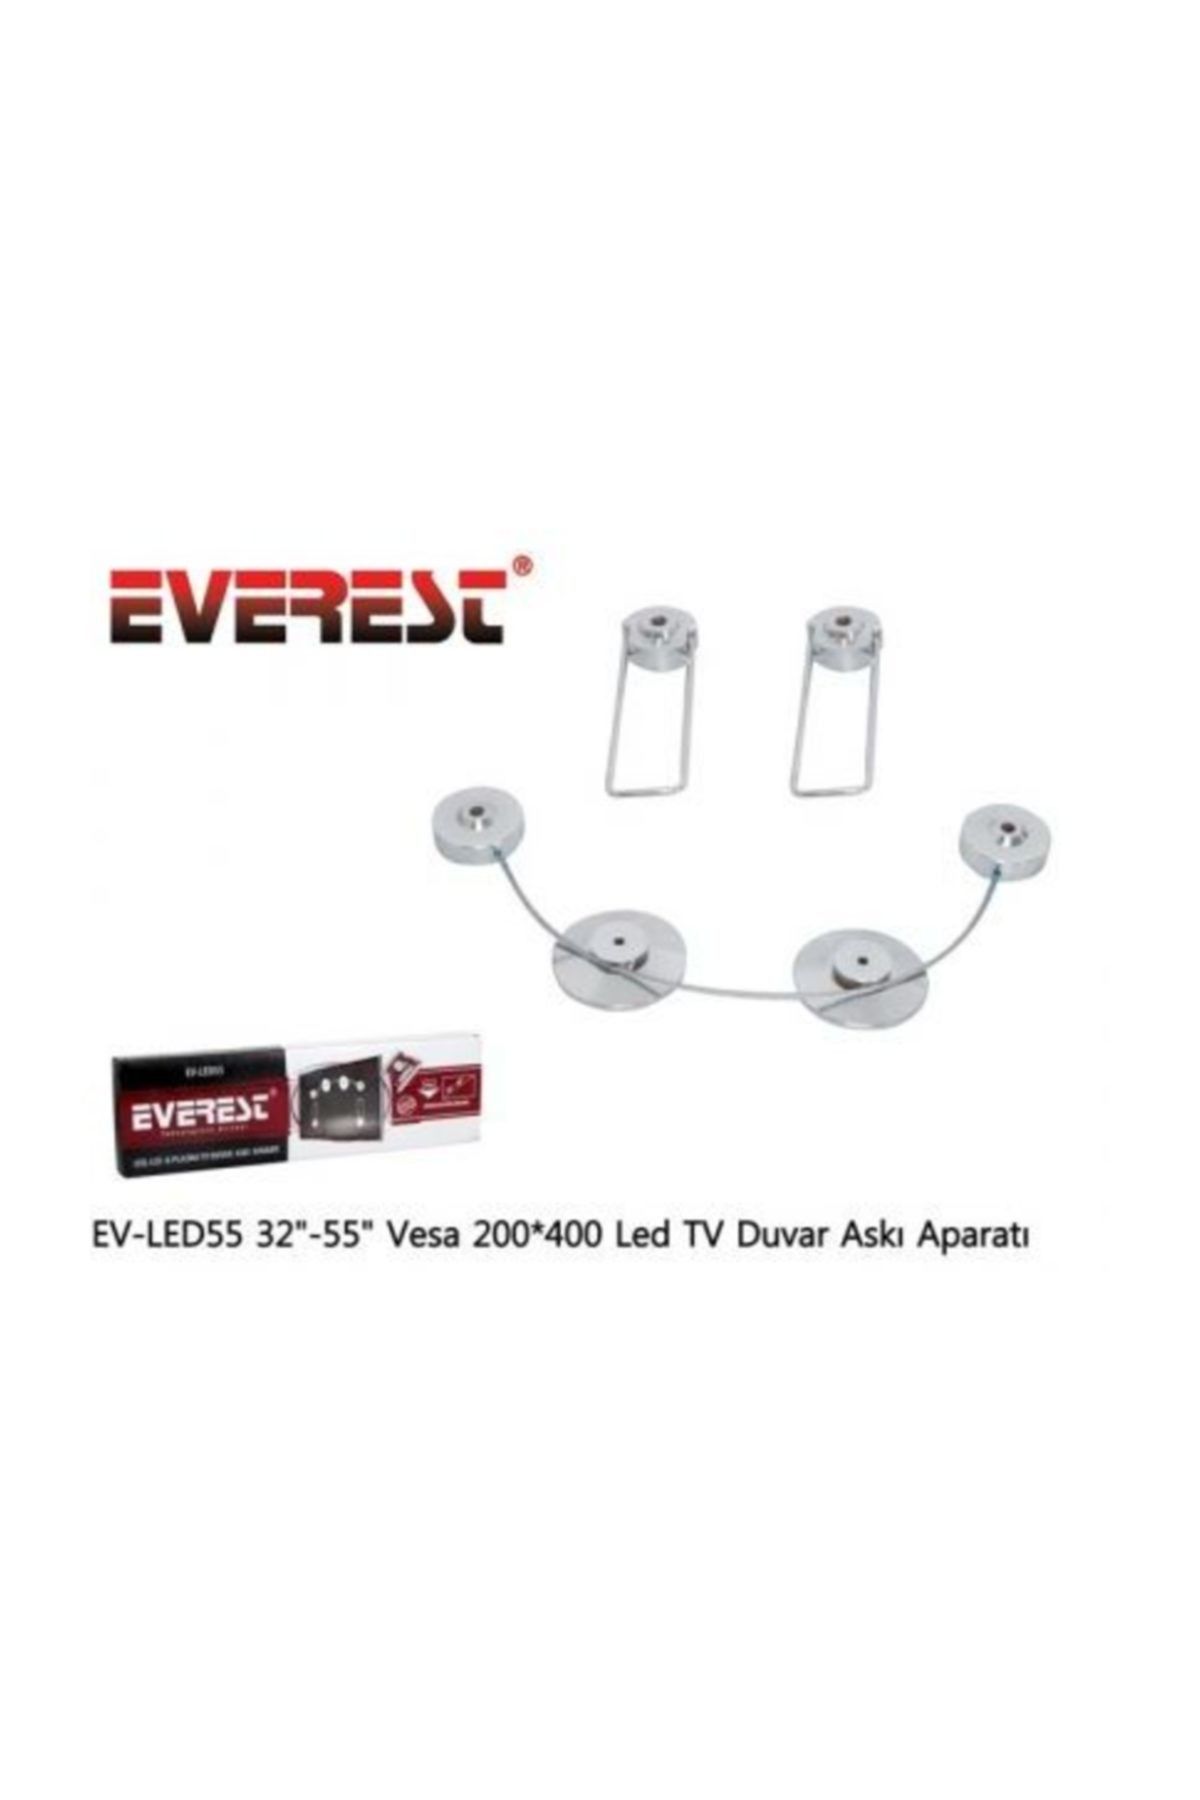 Everest Ev-Led55 32"-55" Vesa Led Tv Duvar Askı